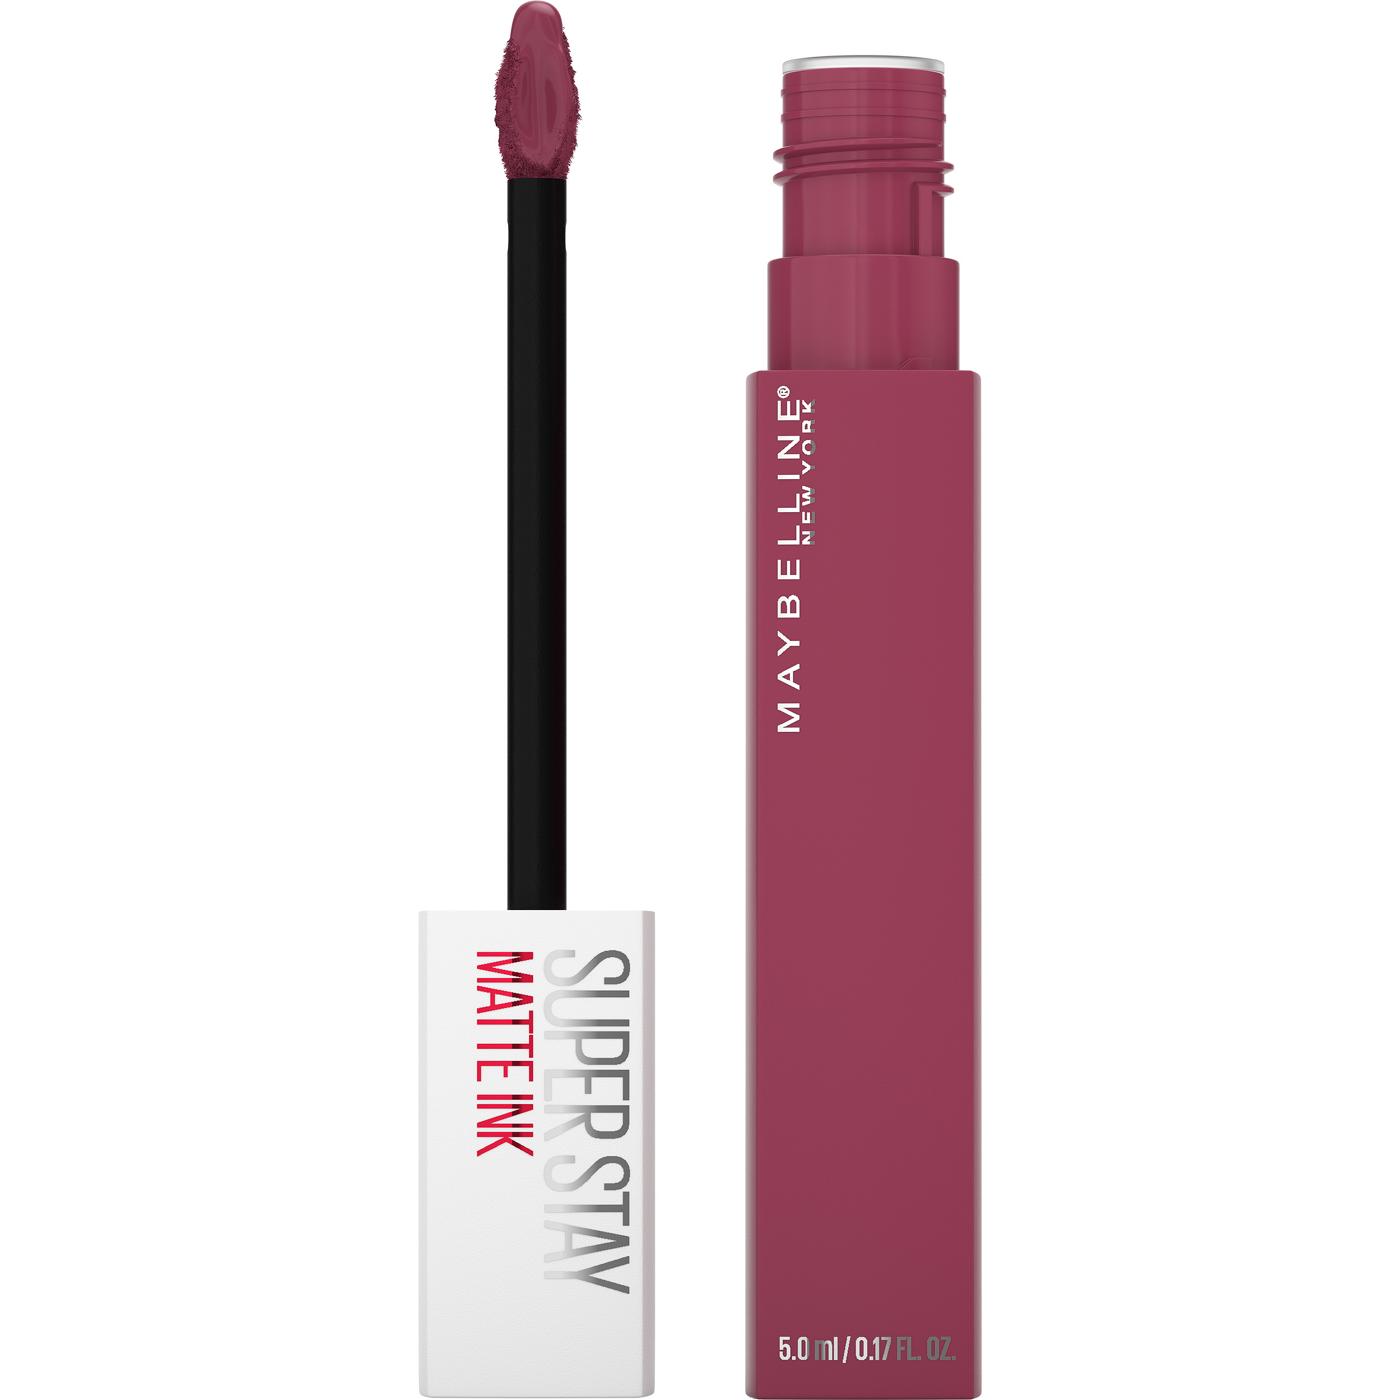 Maybelline Super Stay Matte Ink Liquid Lipstick - Savant; image 4 of 6